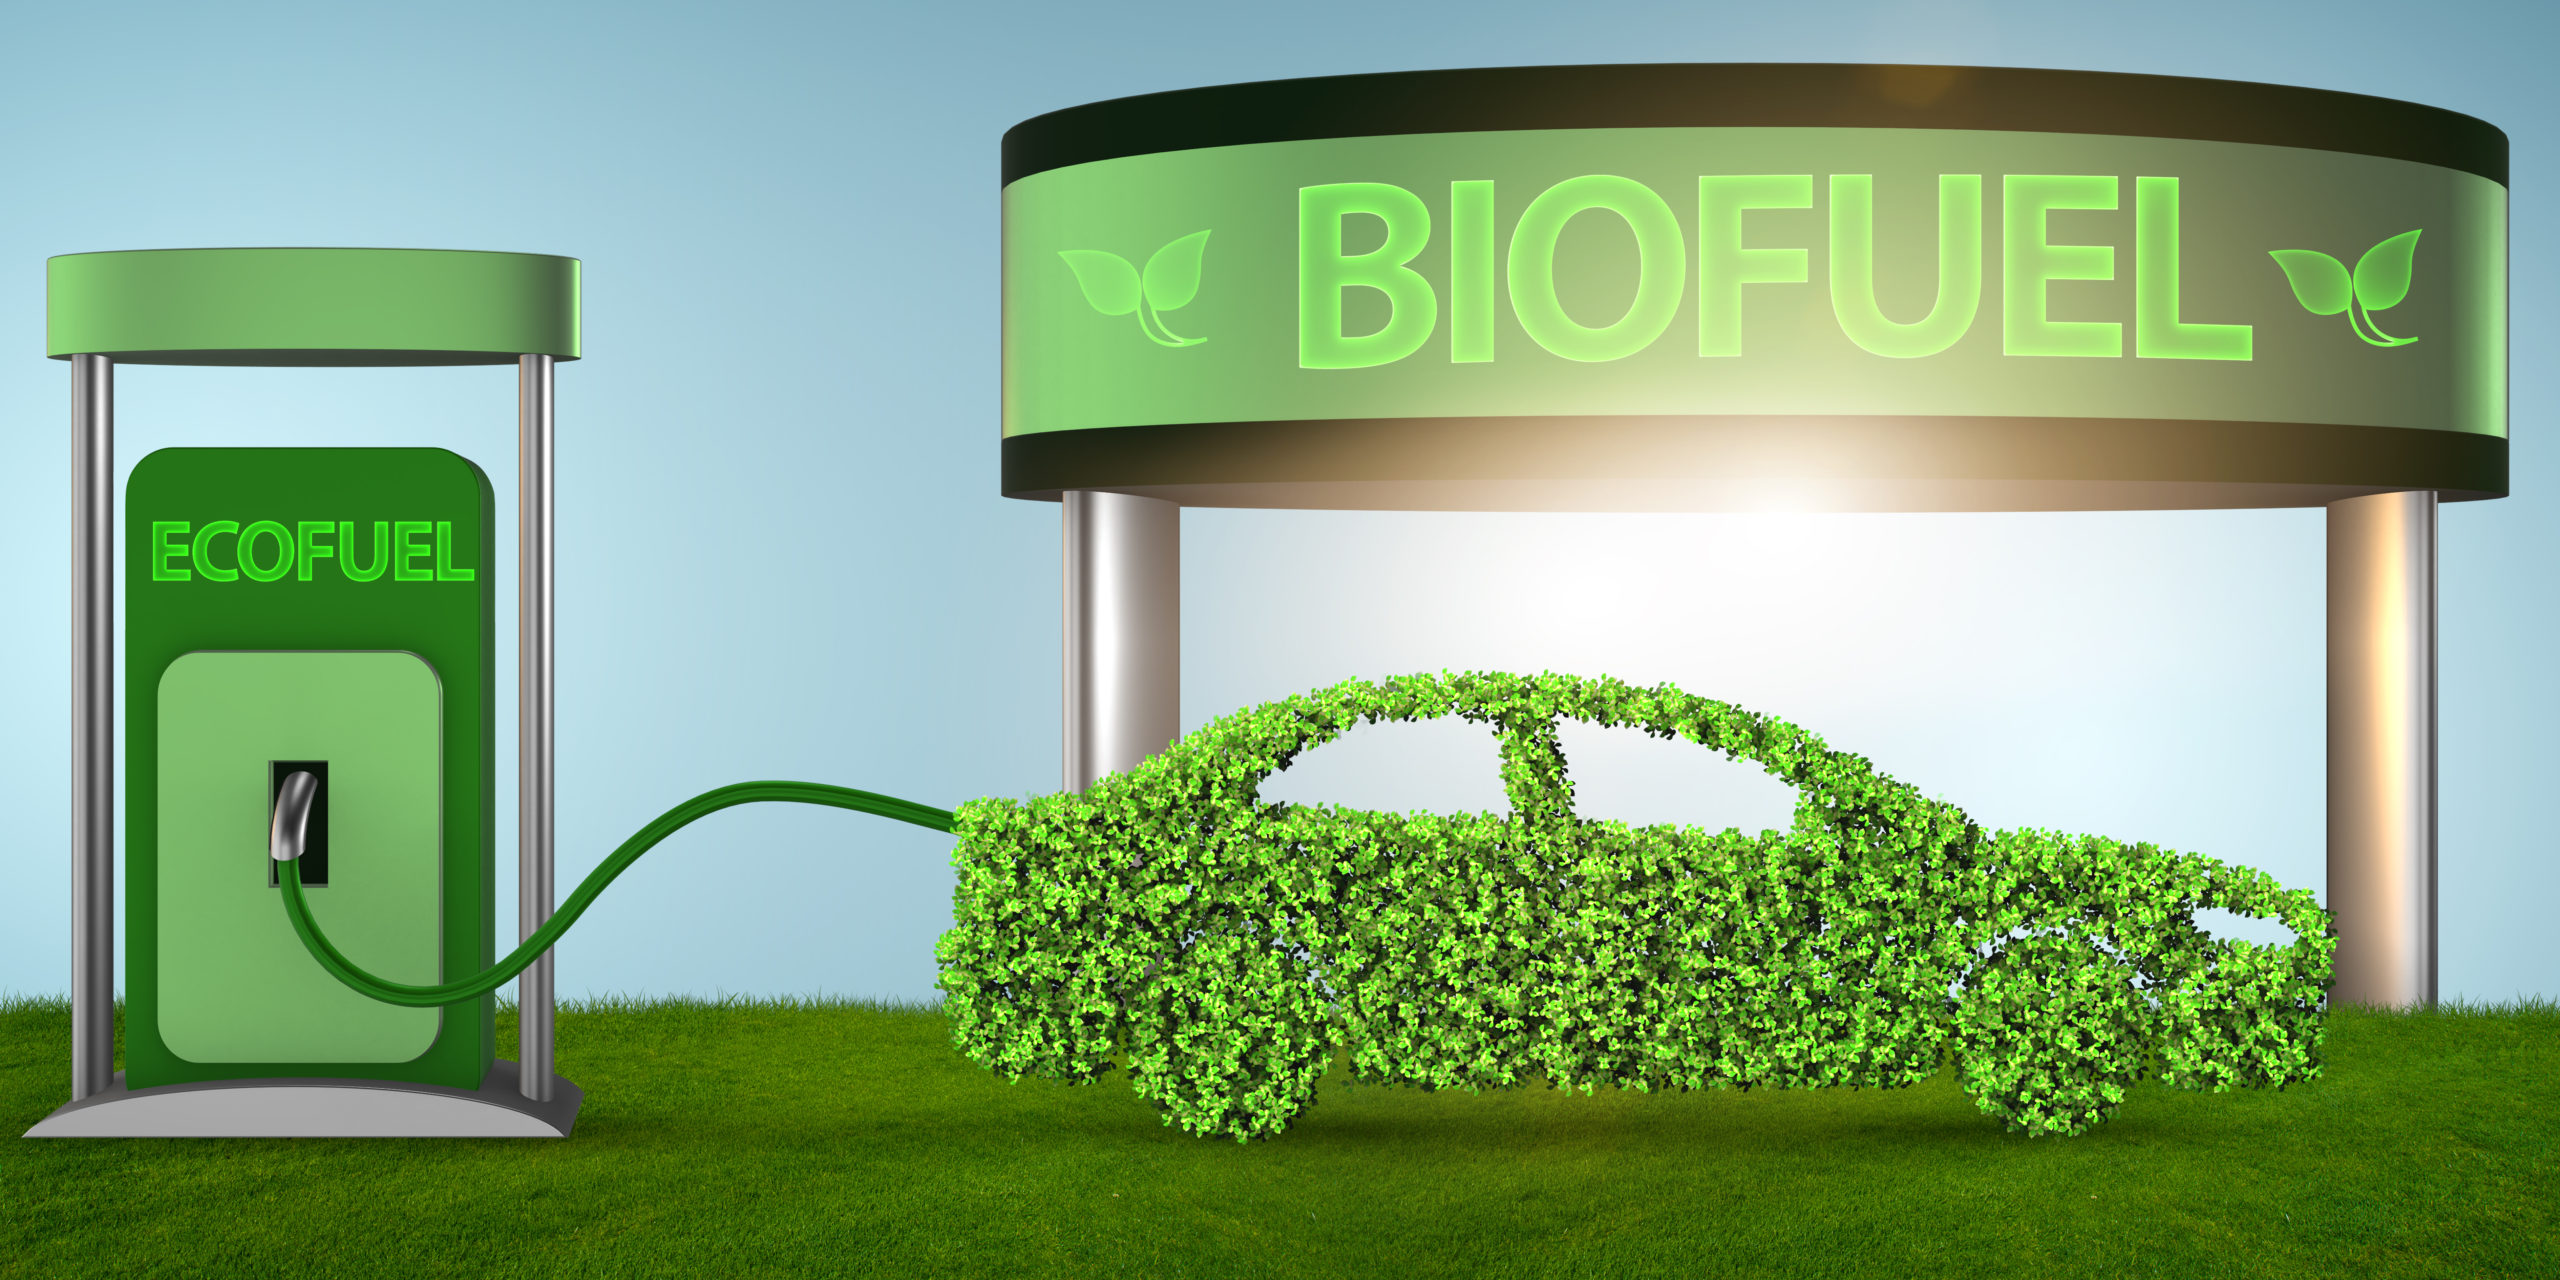 Mobil dapat memanfaatkan sumber energi alternatif dengan mengganti bahan bakar bensin dengan